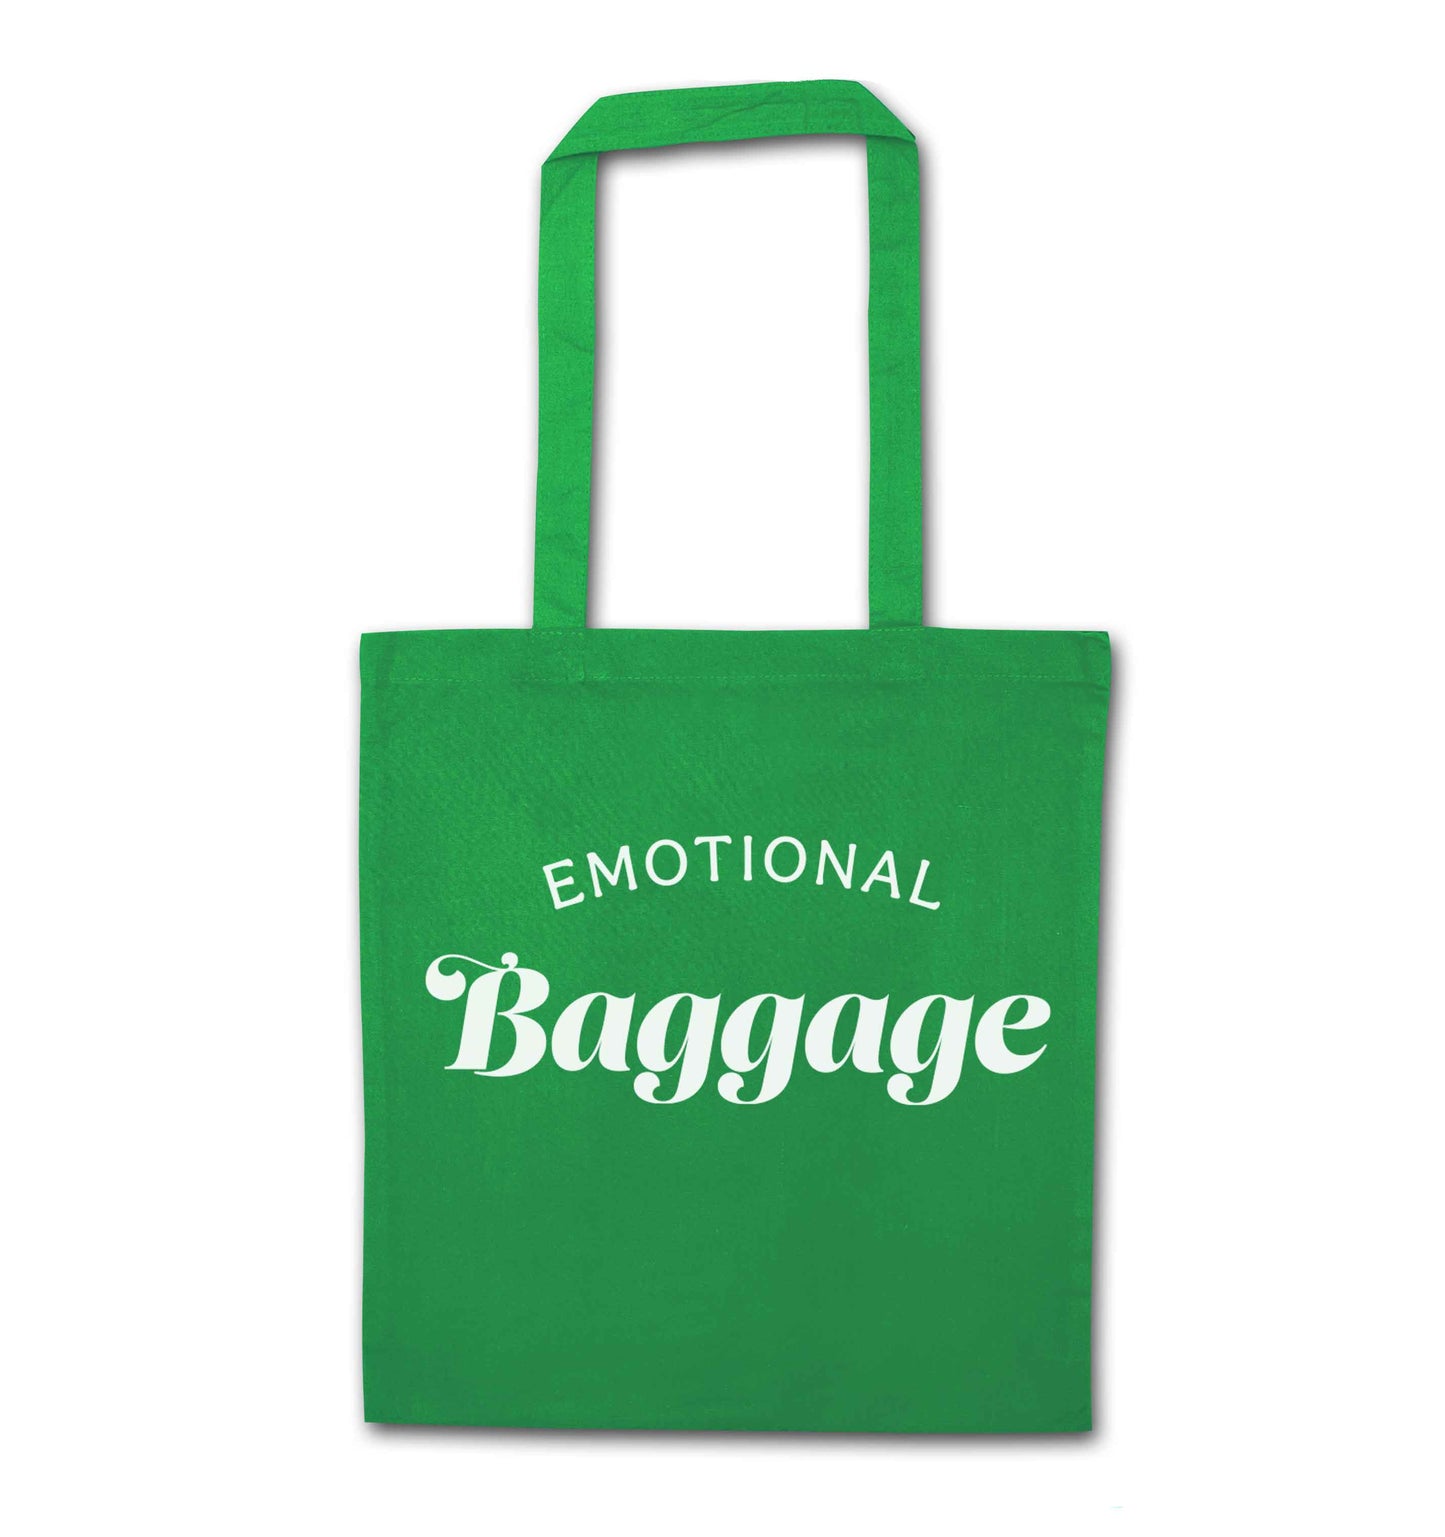 Emotional baggage green tote bag